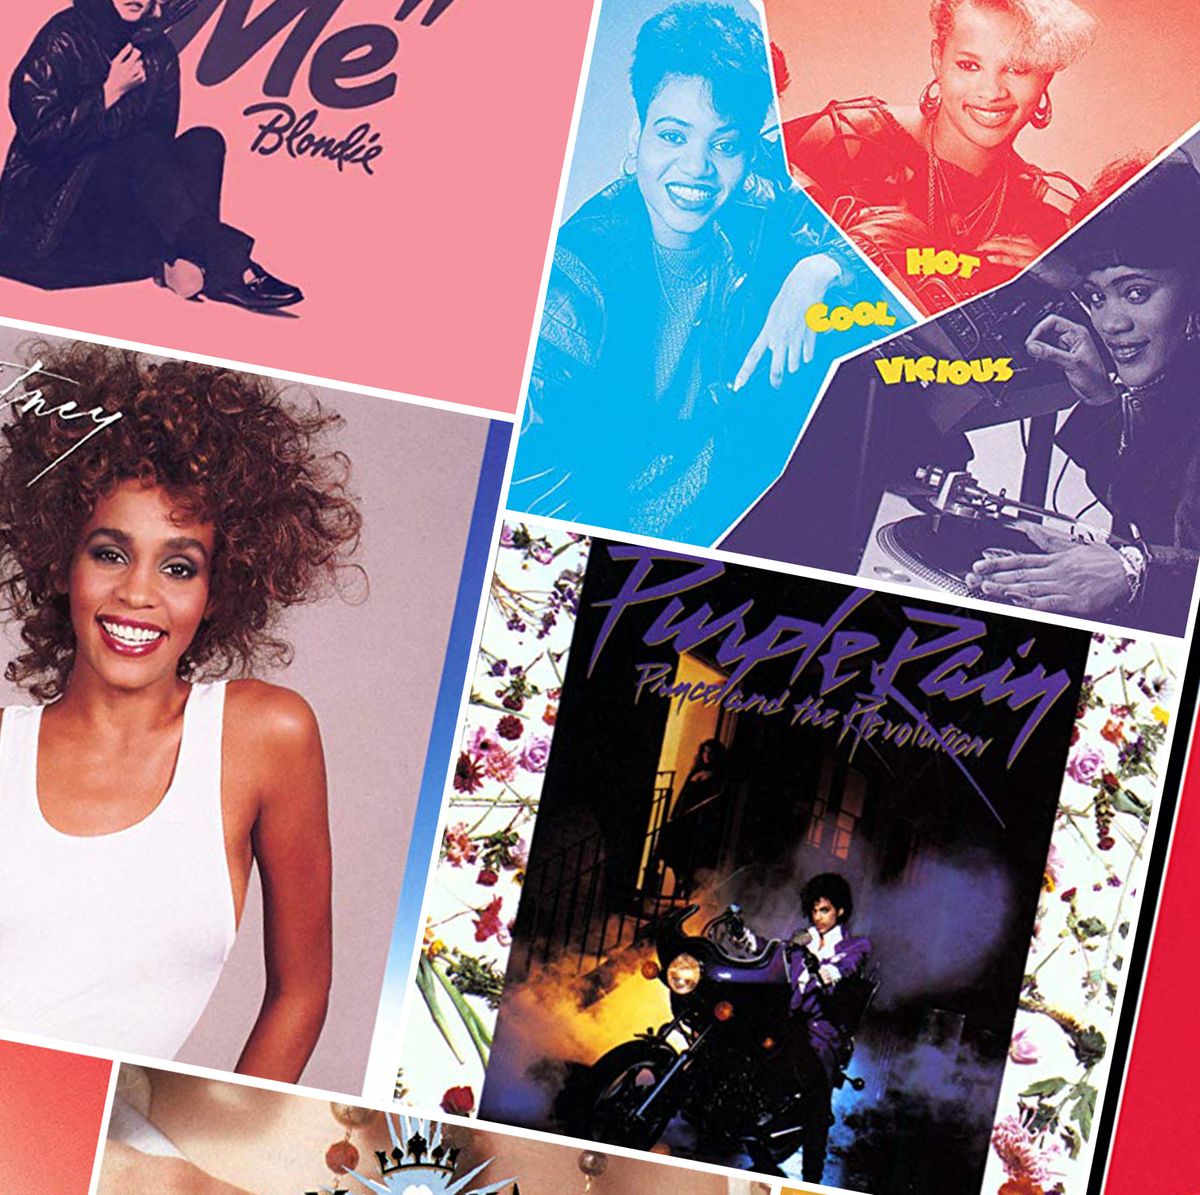 Brug for udstrømning er nok 18 Best '80s Songs - Top Songs of the '80s